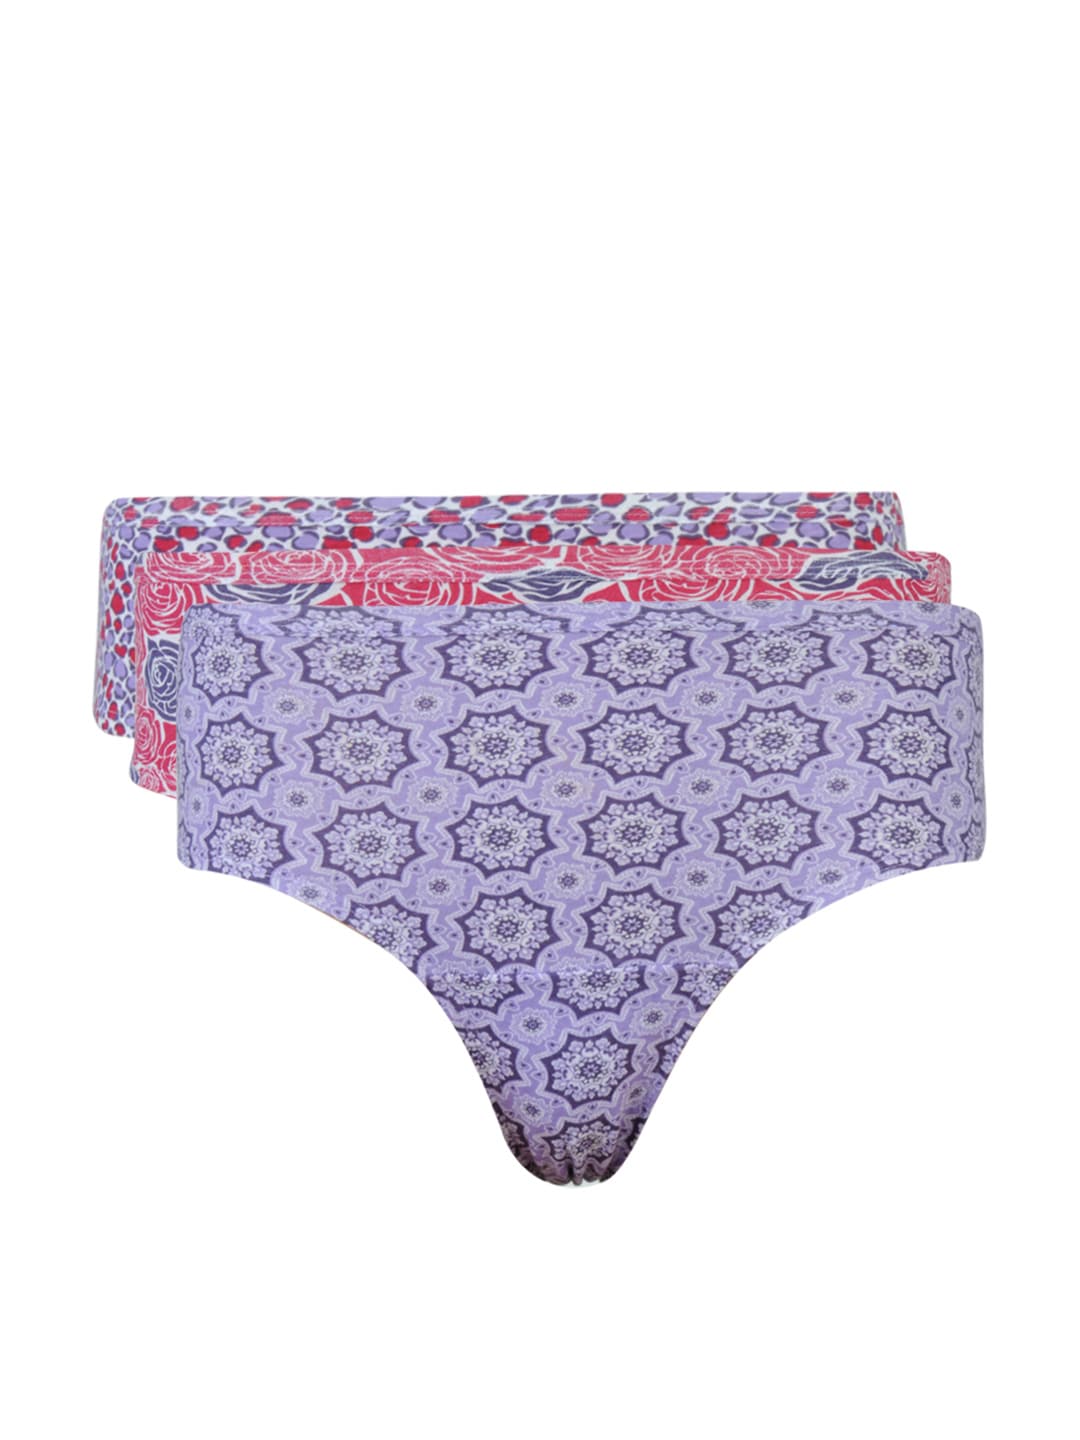 Hanes Women Pack of Three 100% Cotton Printed Bikini Briefs